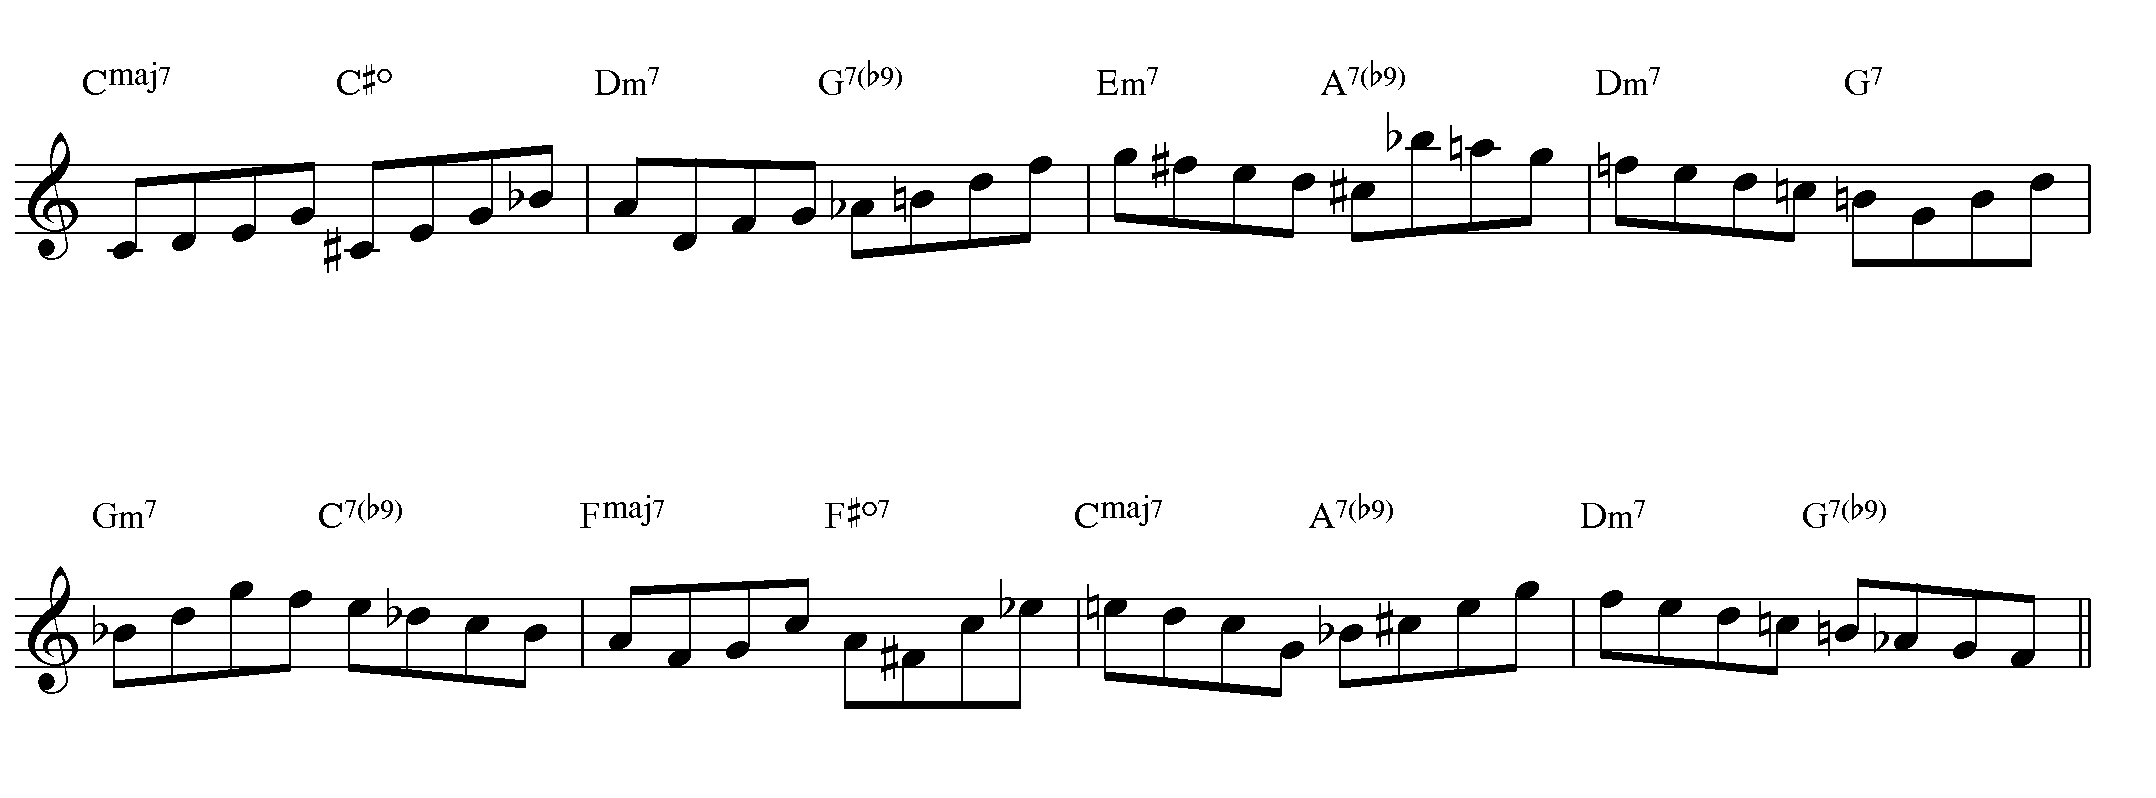 LJS Rhythm Changes Example 1